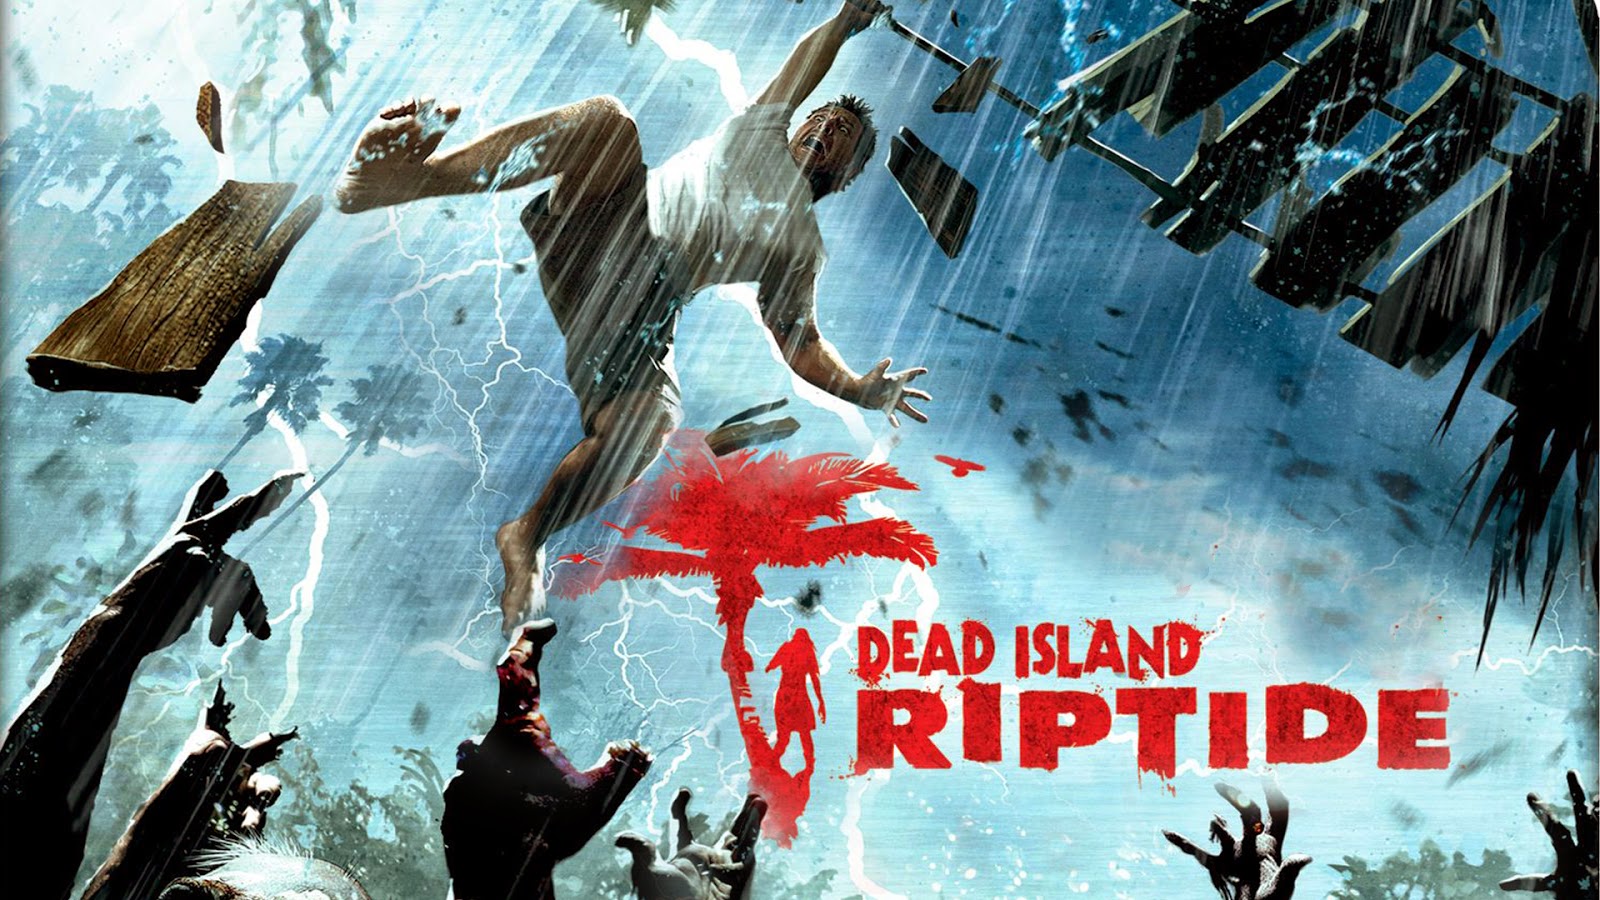 Erik At The Gates: Review: Dead Island: Riptide